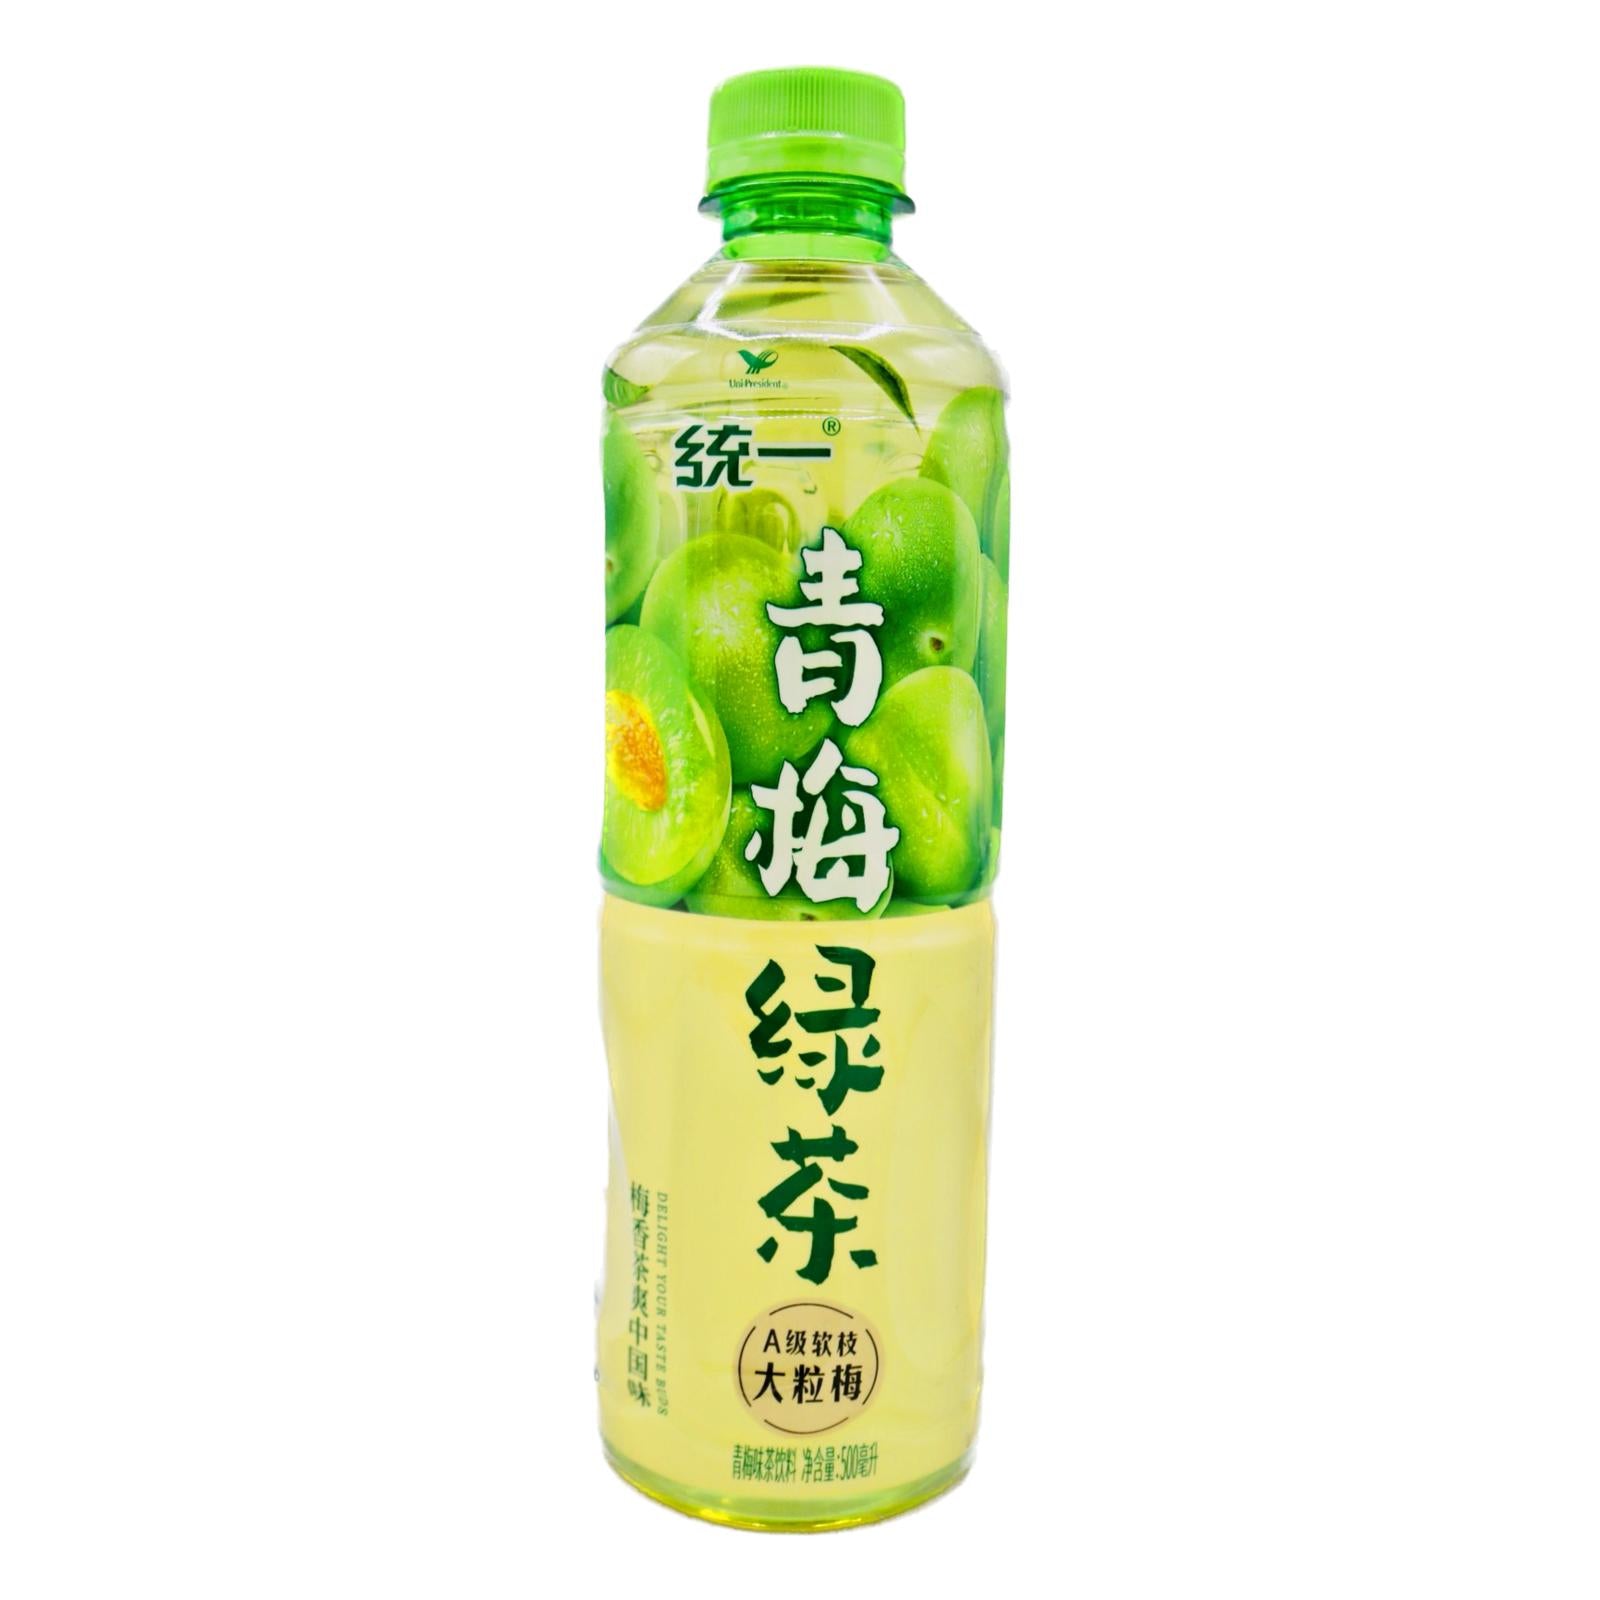 UNIF Green Tea Drink - Plum Flavour (With Sugar and Sweetener) 500ml - Tuk Tuk Mart